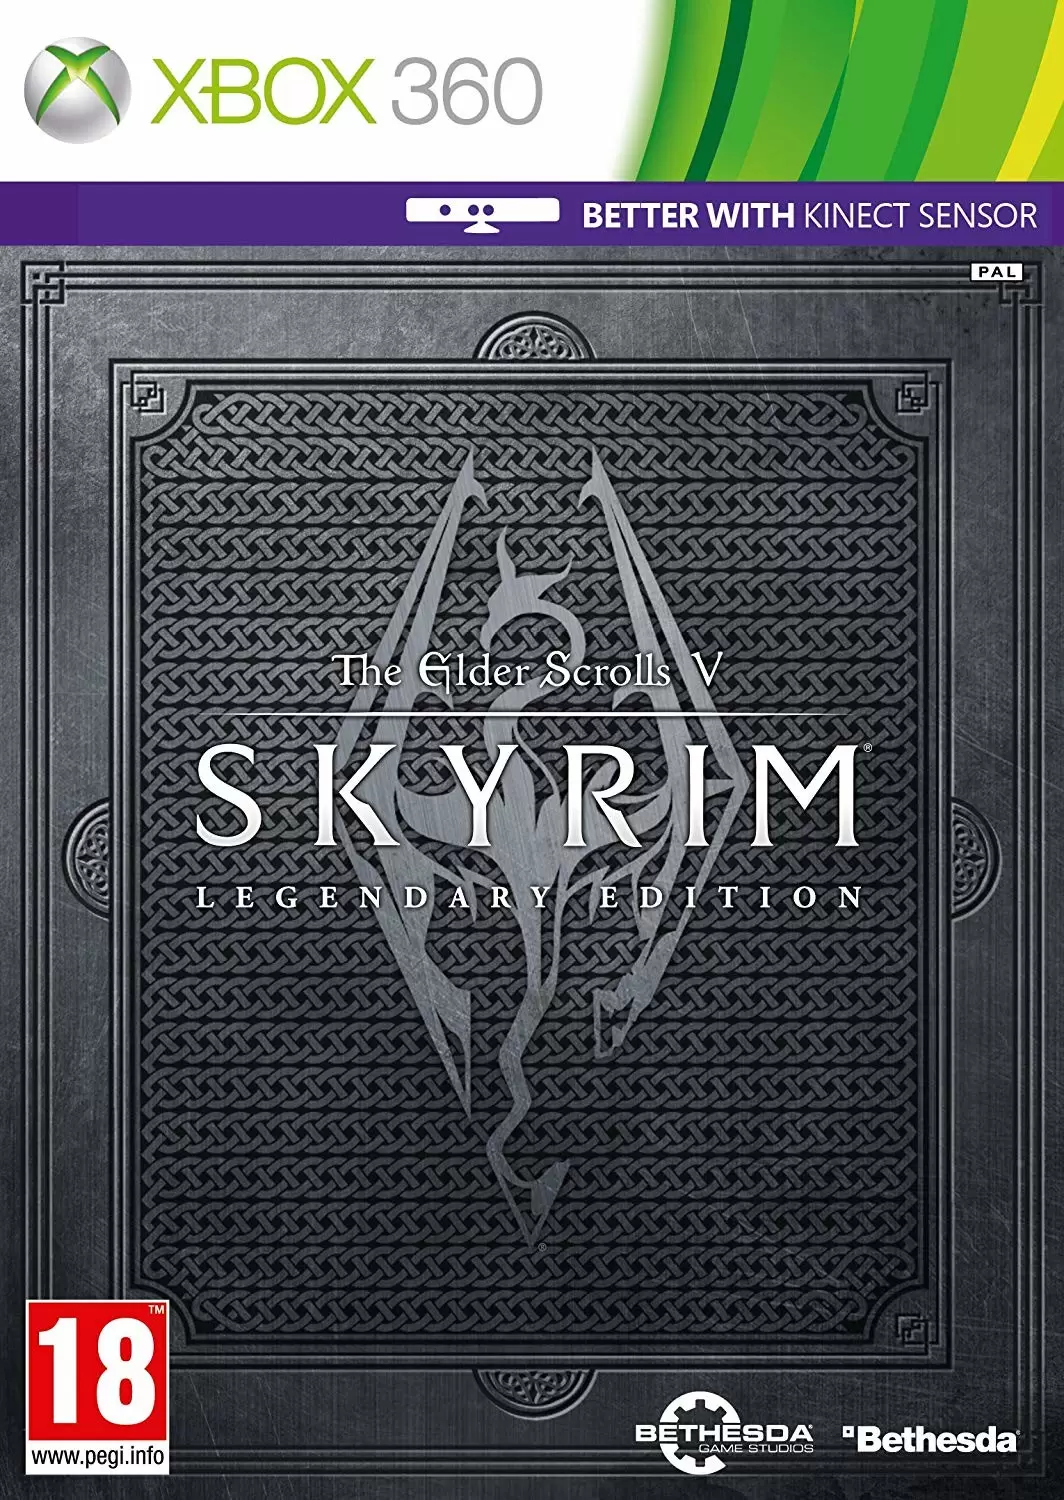 XBOX 360 Games - The Elder Scrolls V : Skyrim - Legendary Edition